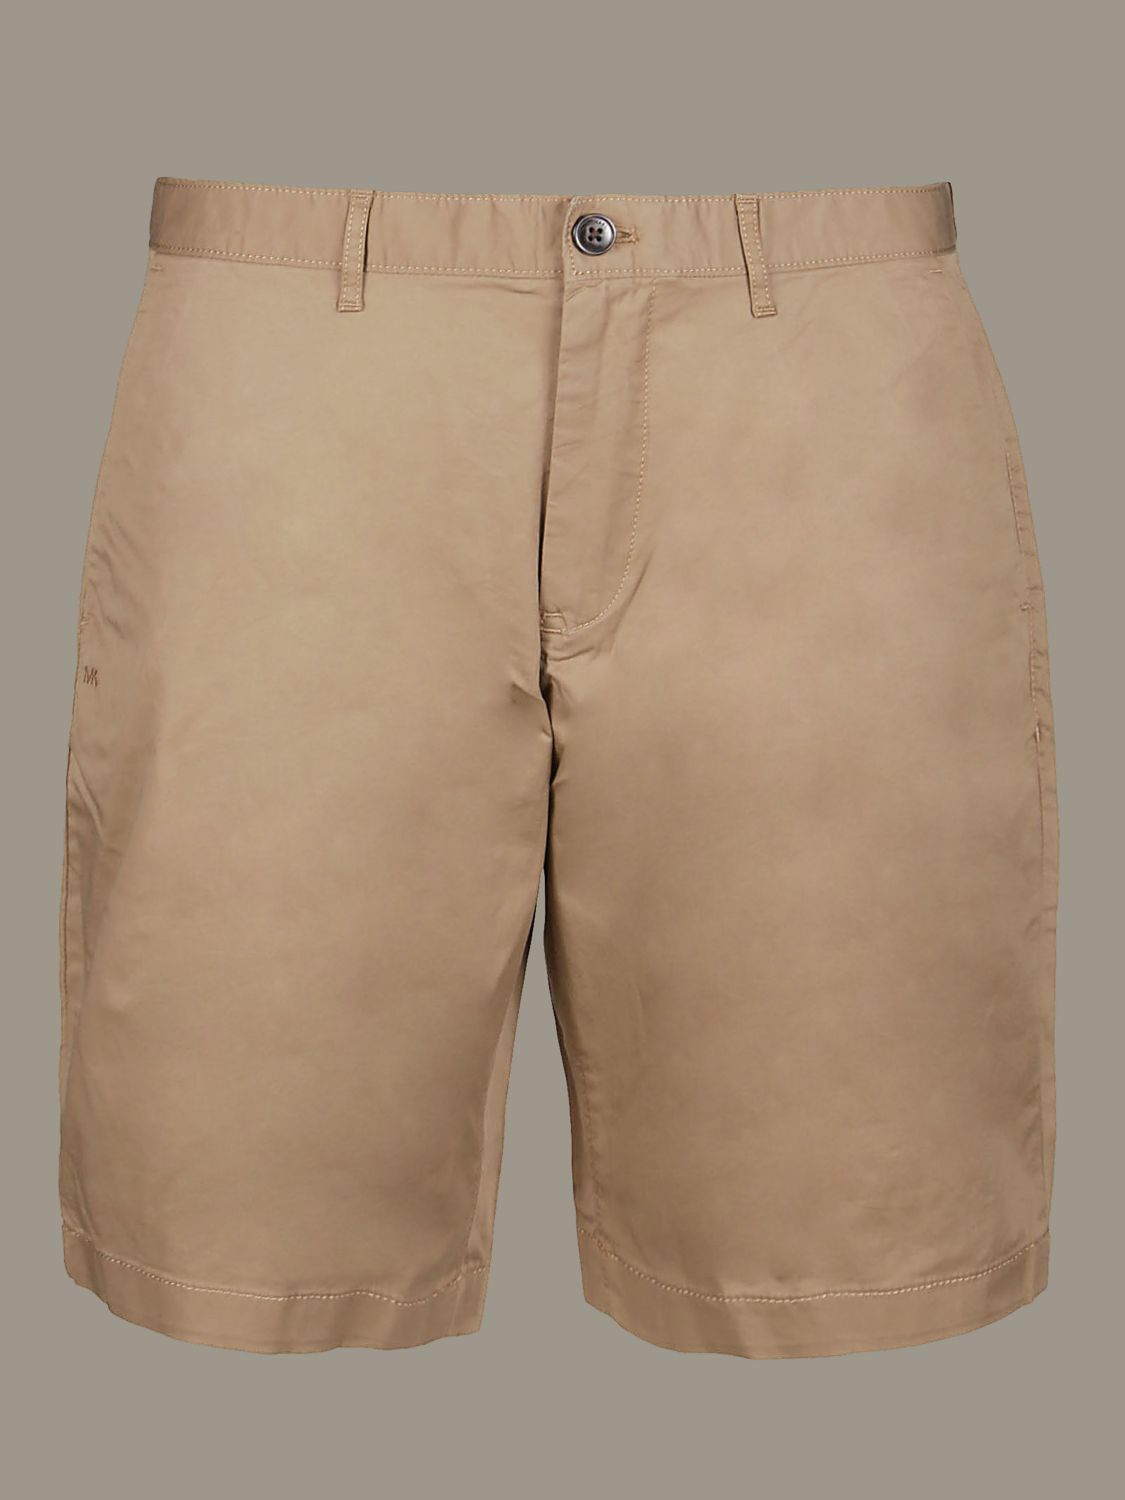 michael kors shorts